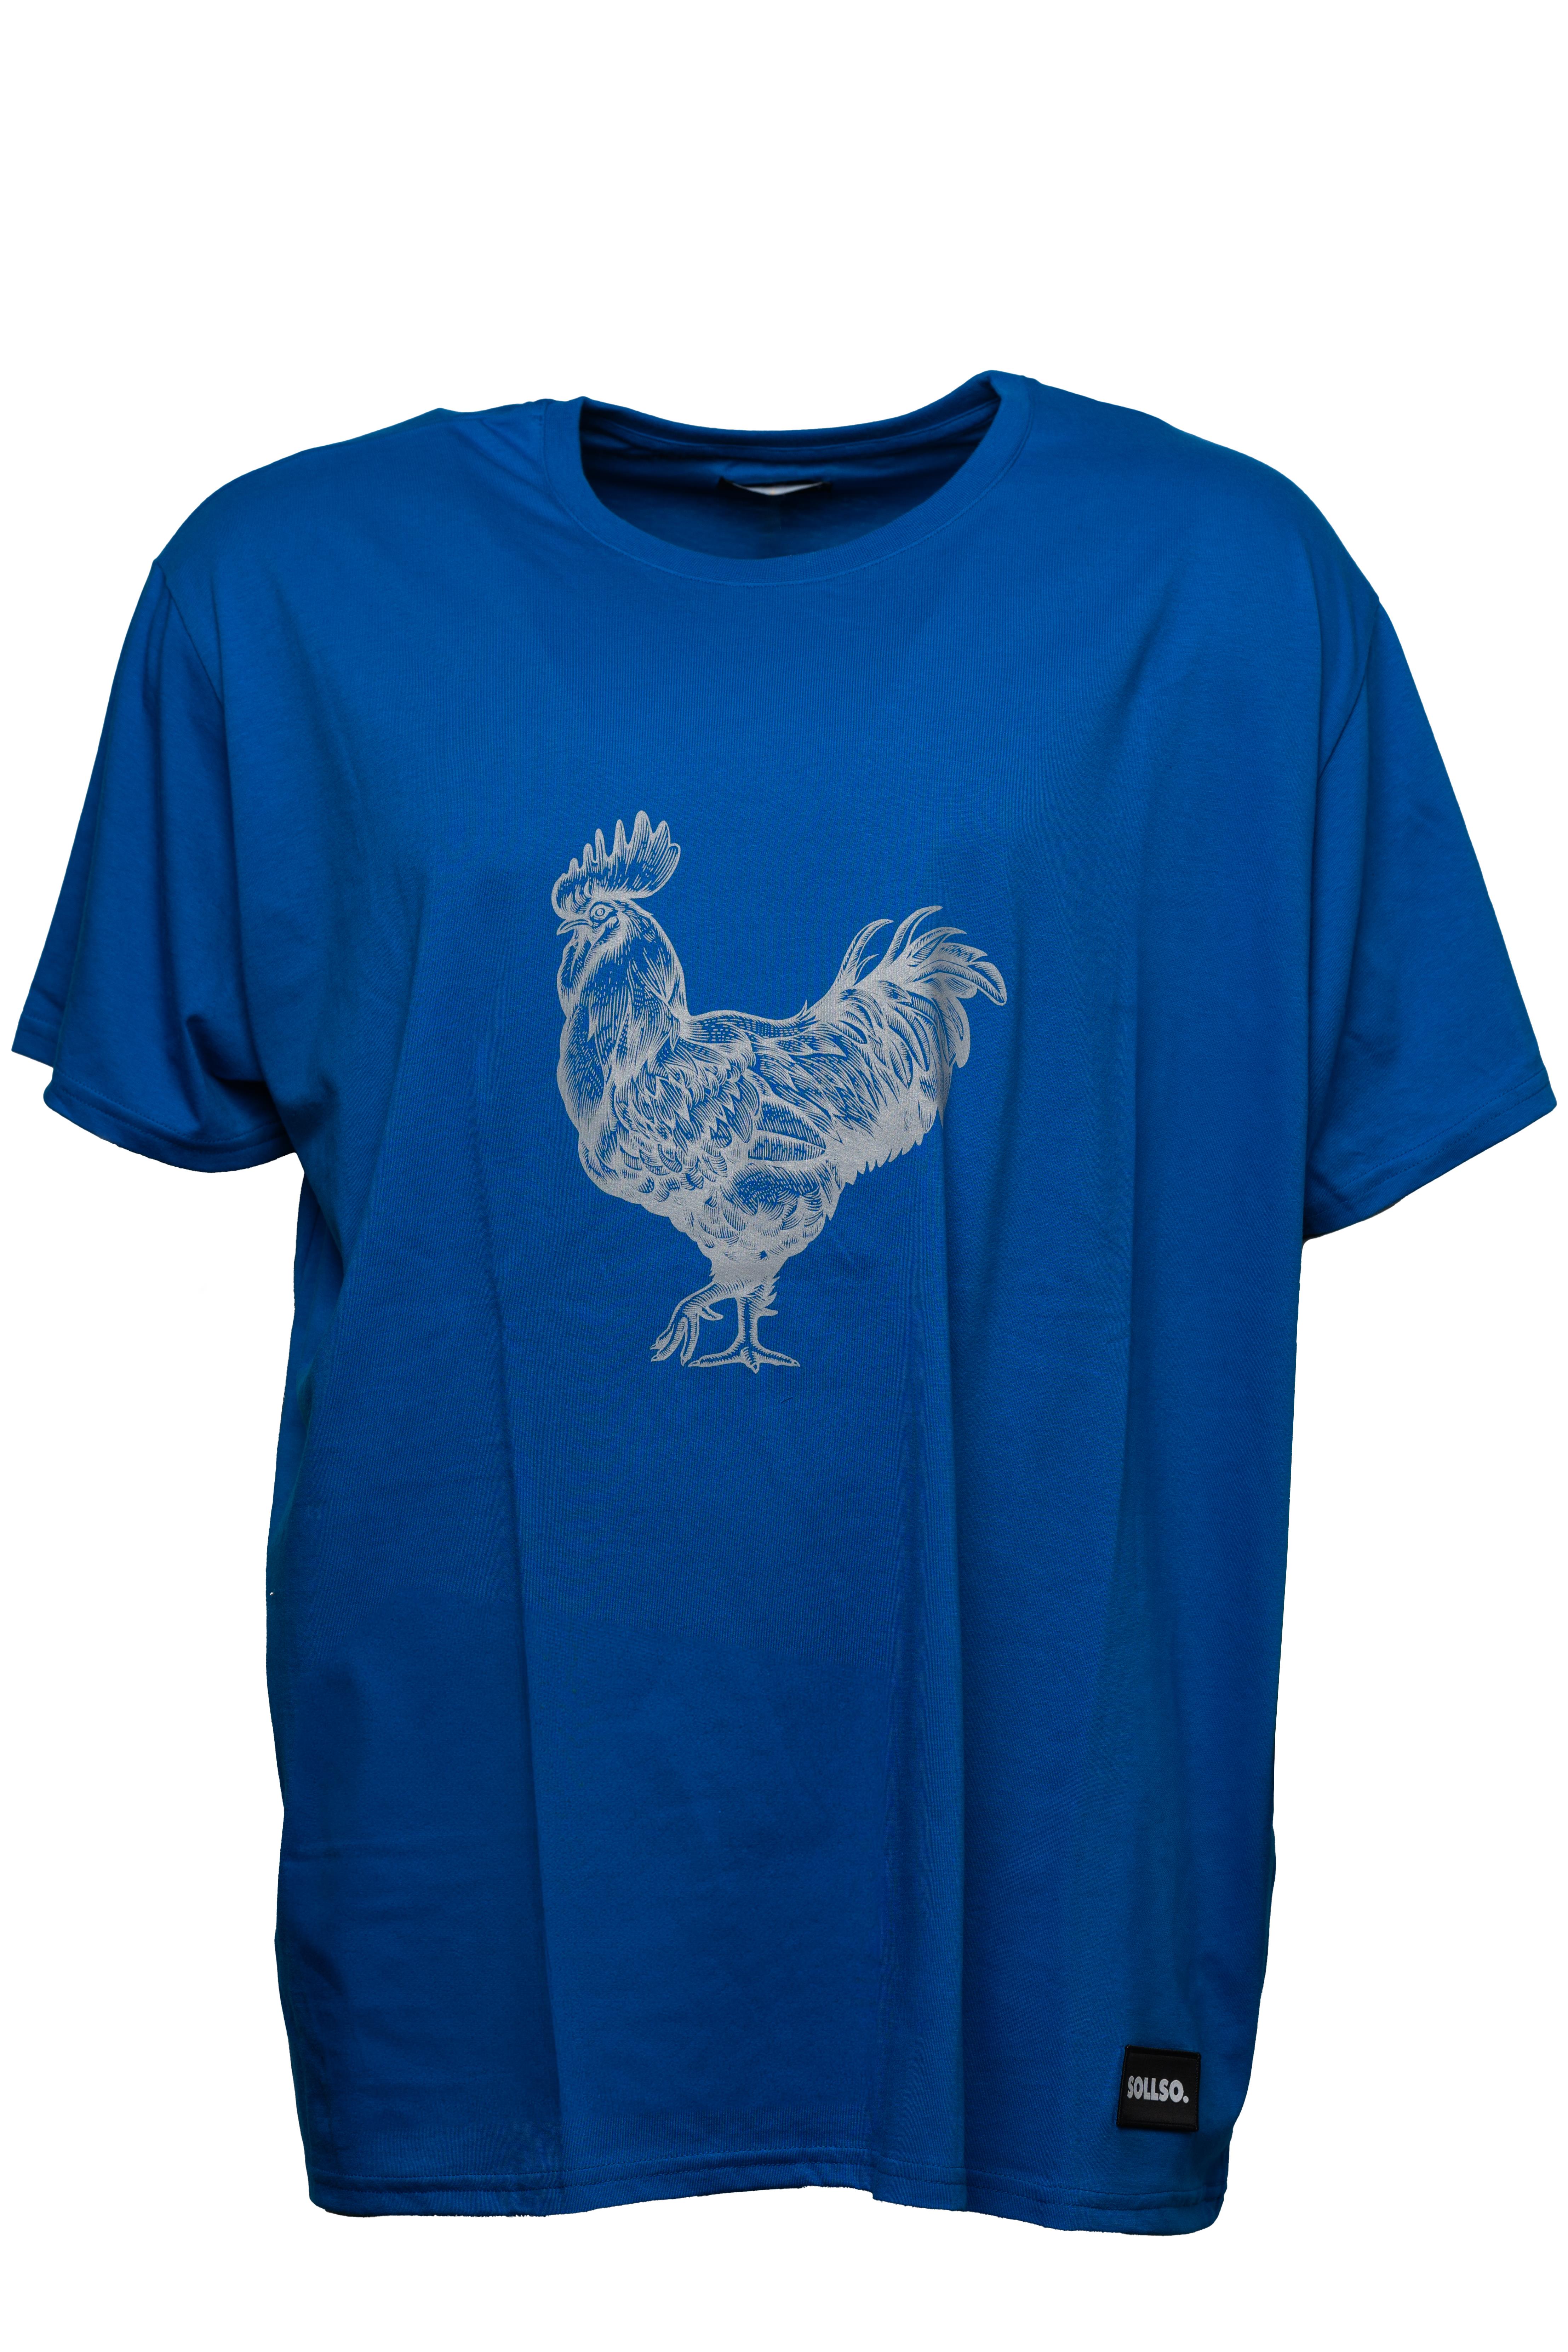 SOLLSO. T-Shirt "Rooster", Farbe Ocean Blue, Größe S